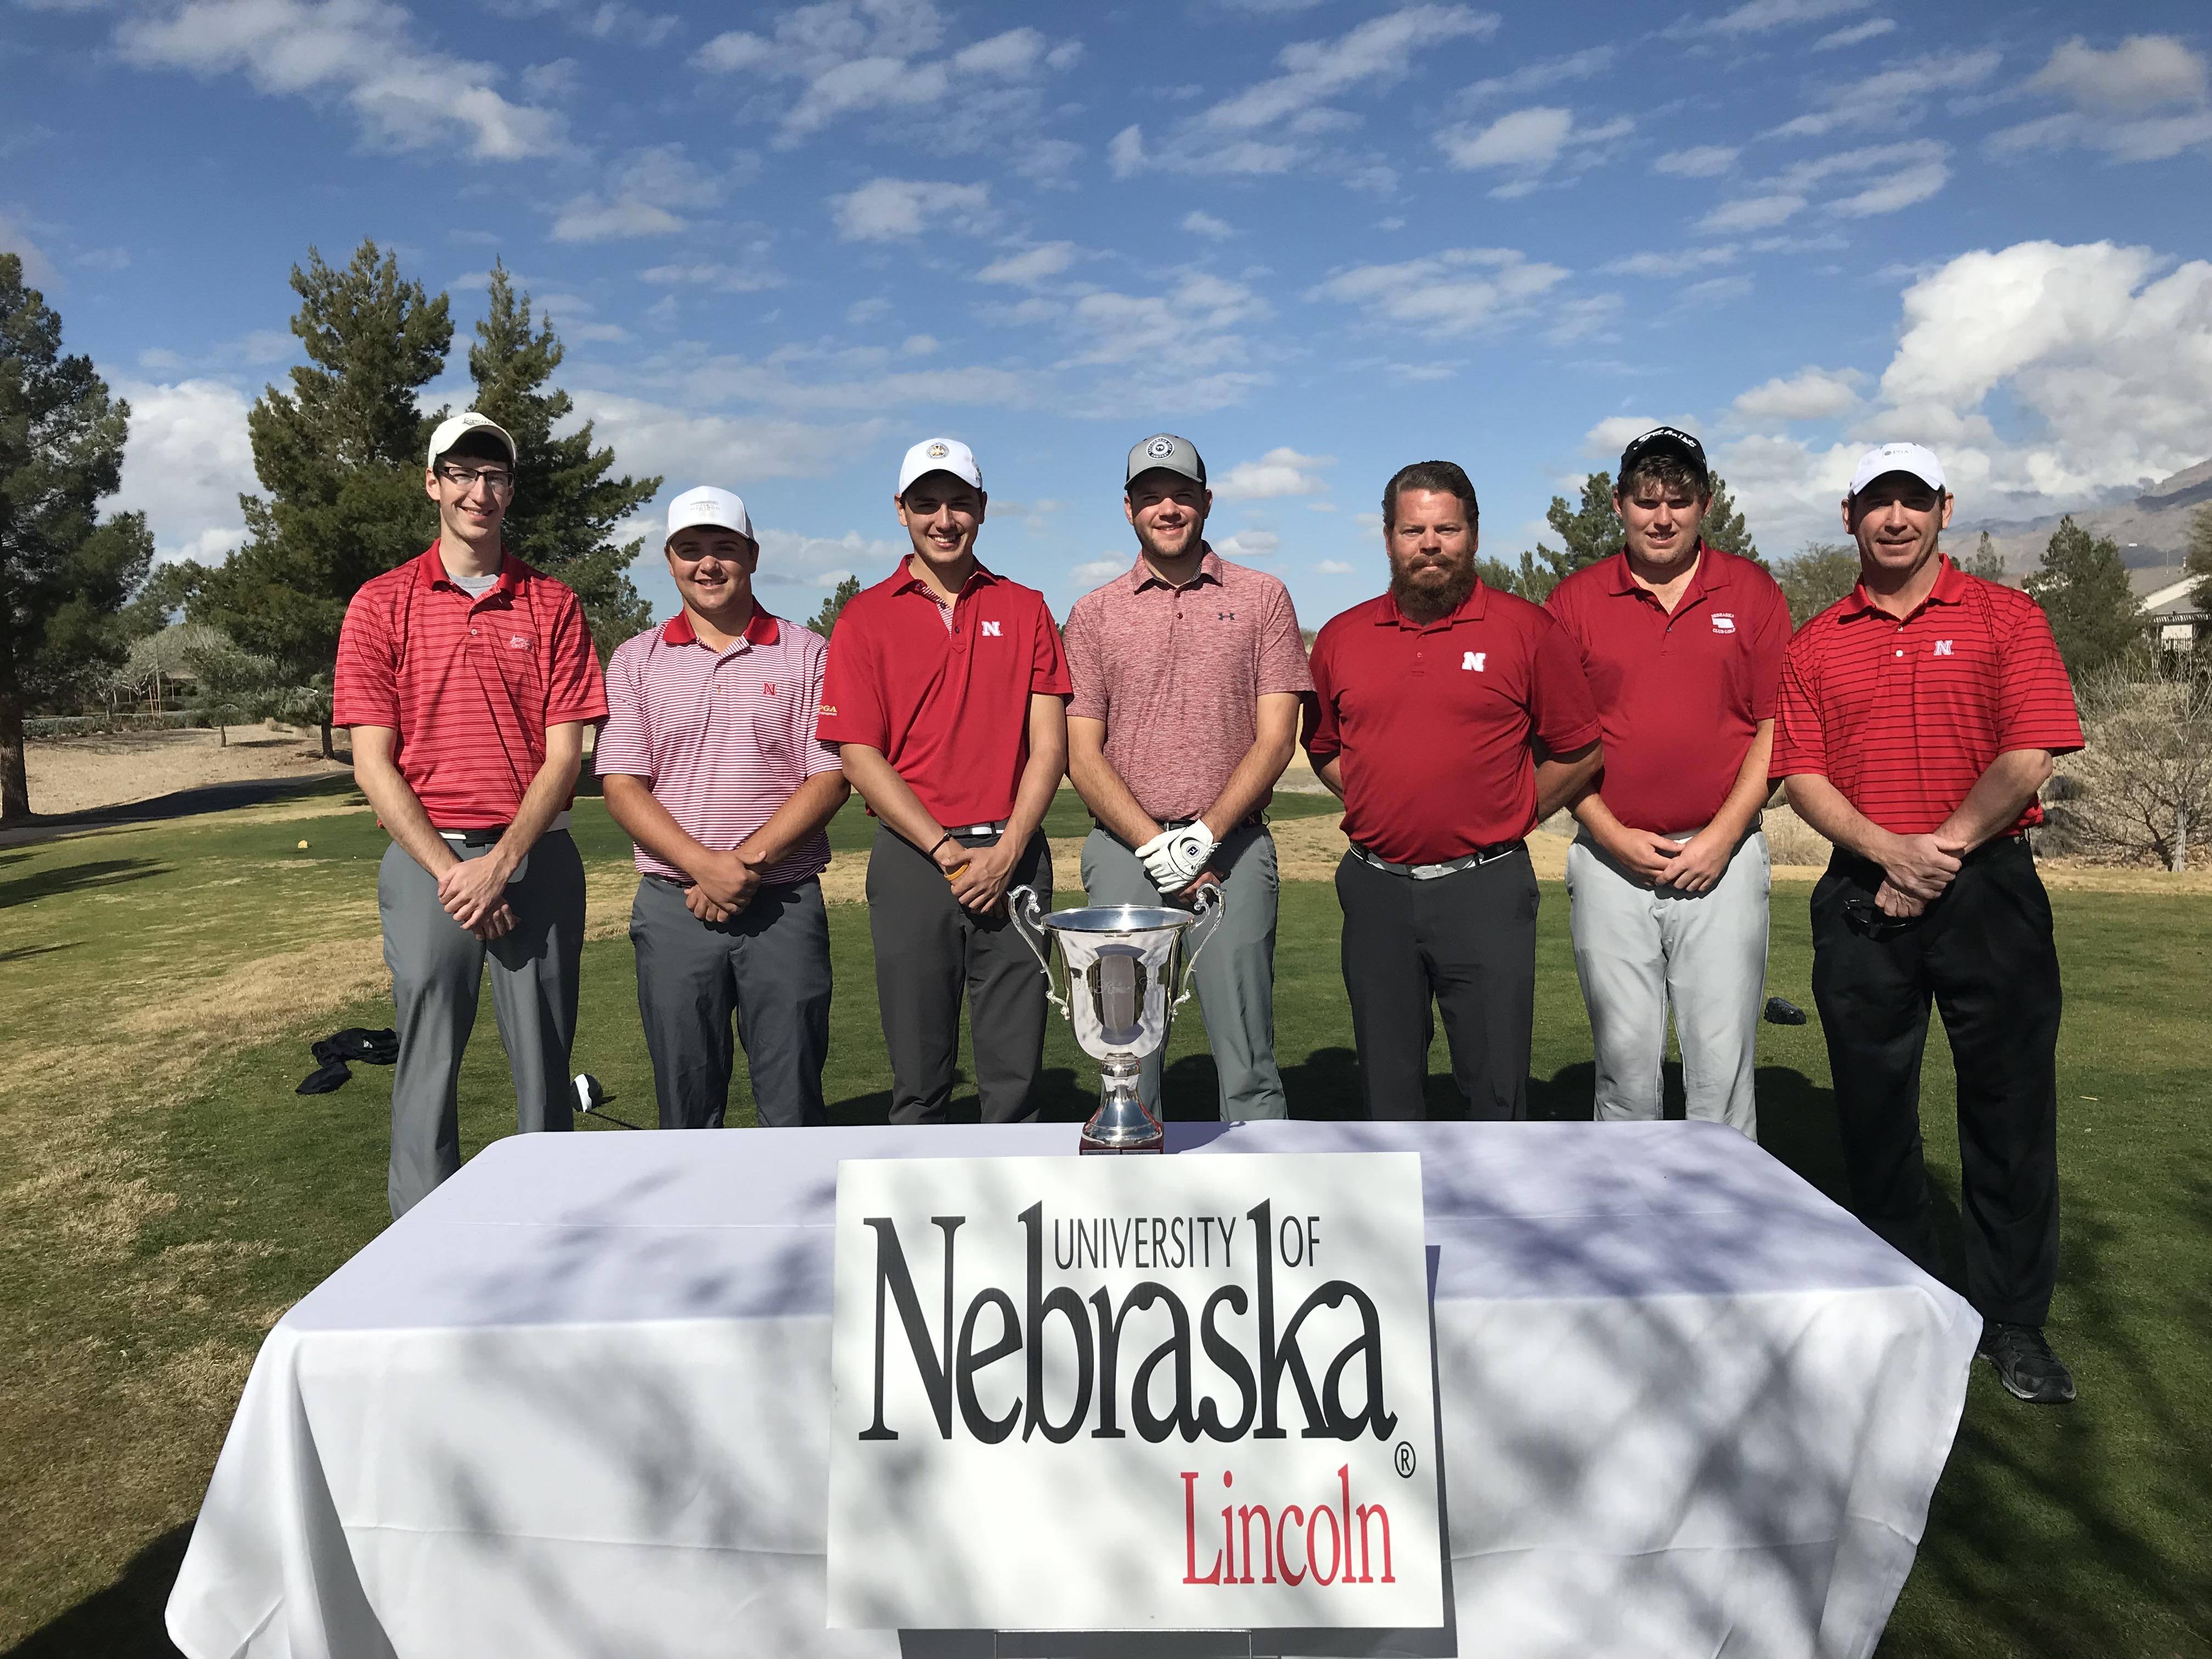 Team Nebraska (from left to right) includes Josh Baldus, Landon Maassen, Brendan Bond, Zach Sachen, Bill Rhiley, Austin Dell, and Coach Scott Holly